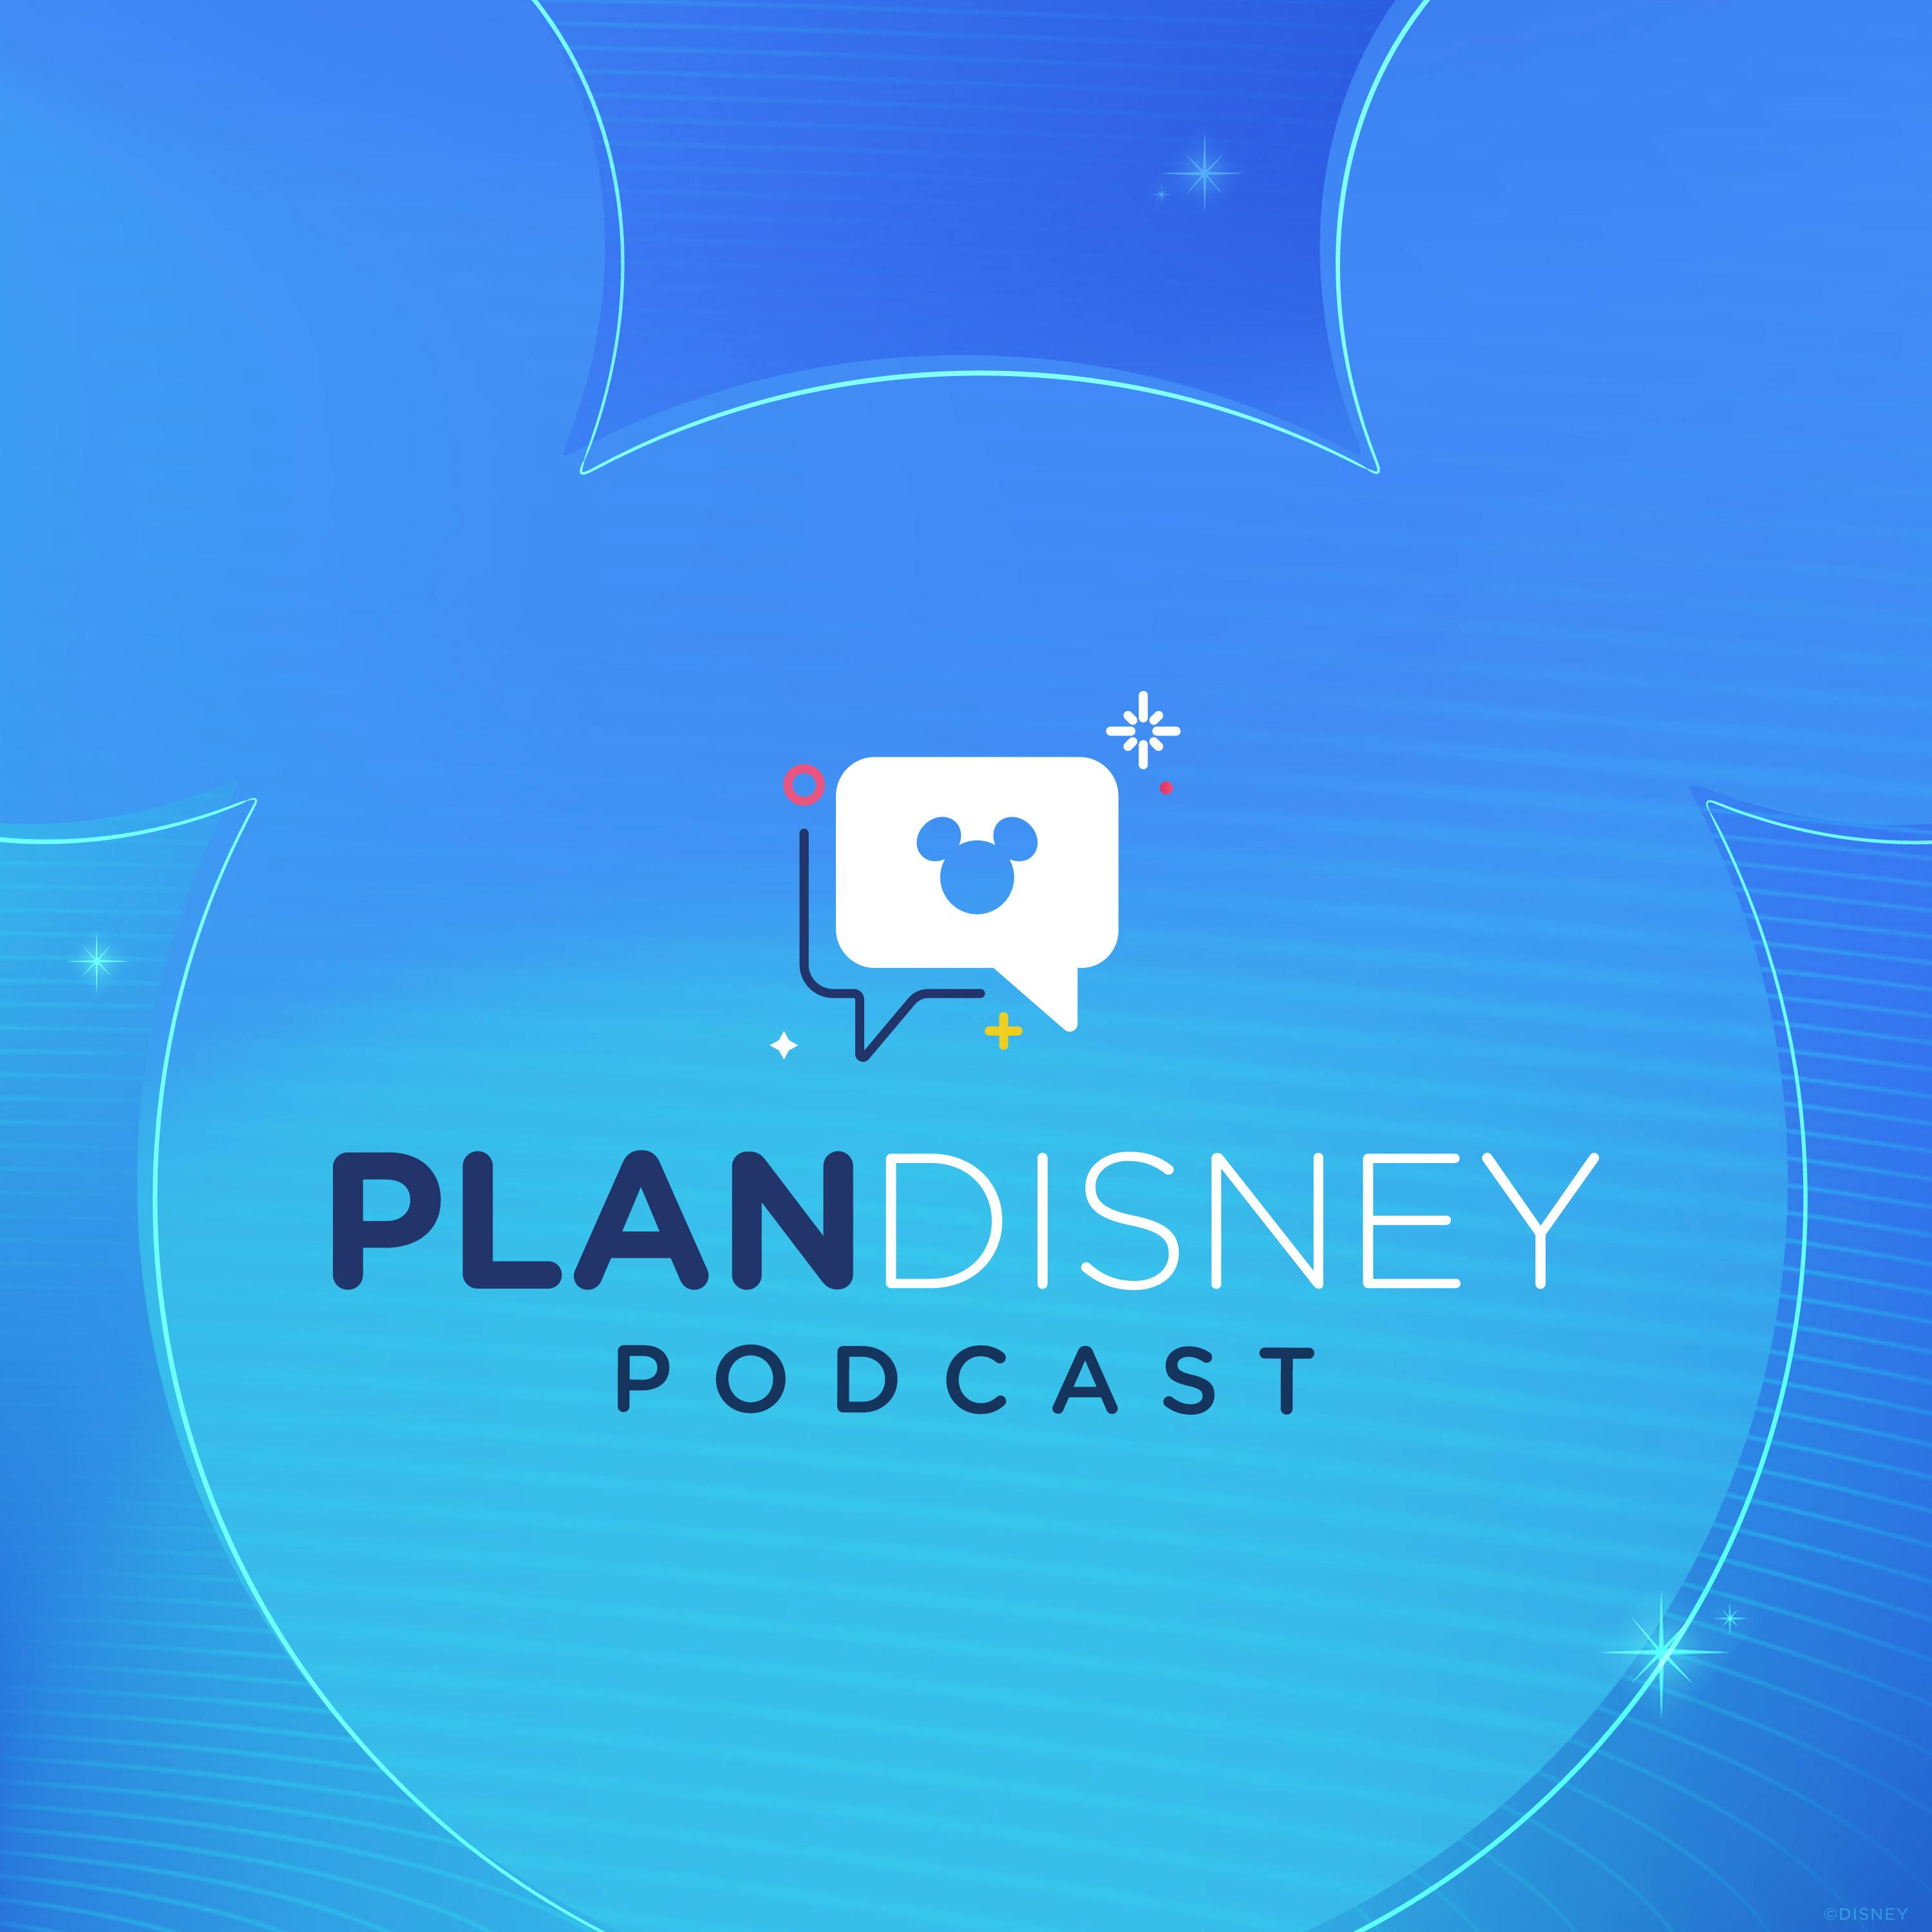 planDisney Podcast podcast show image